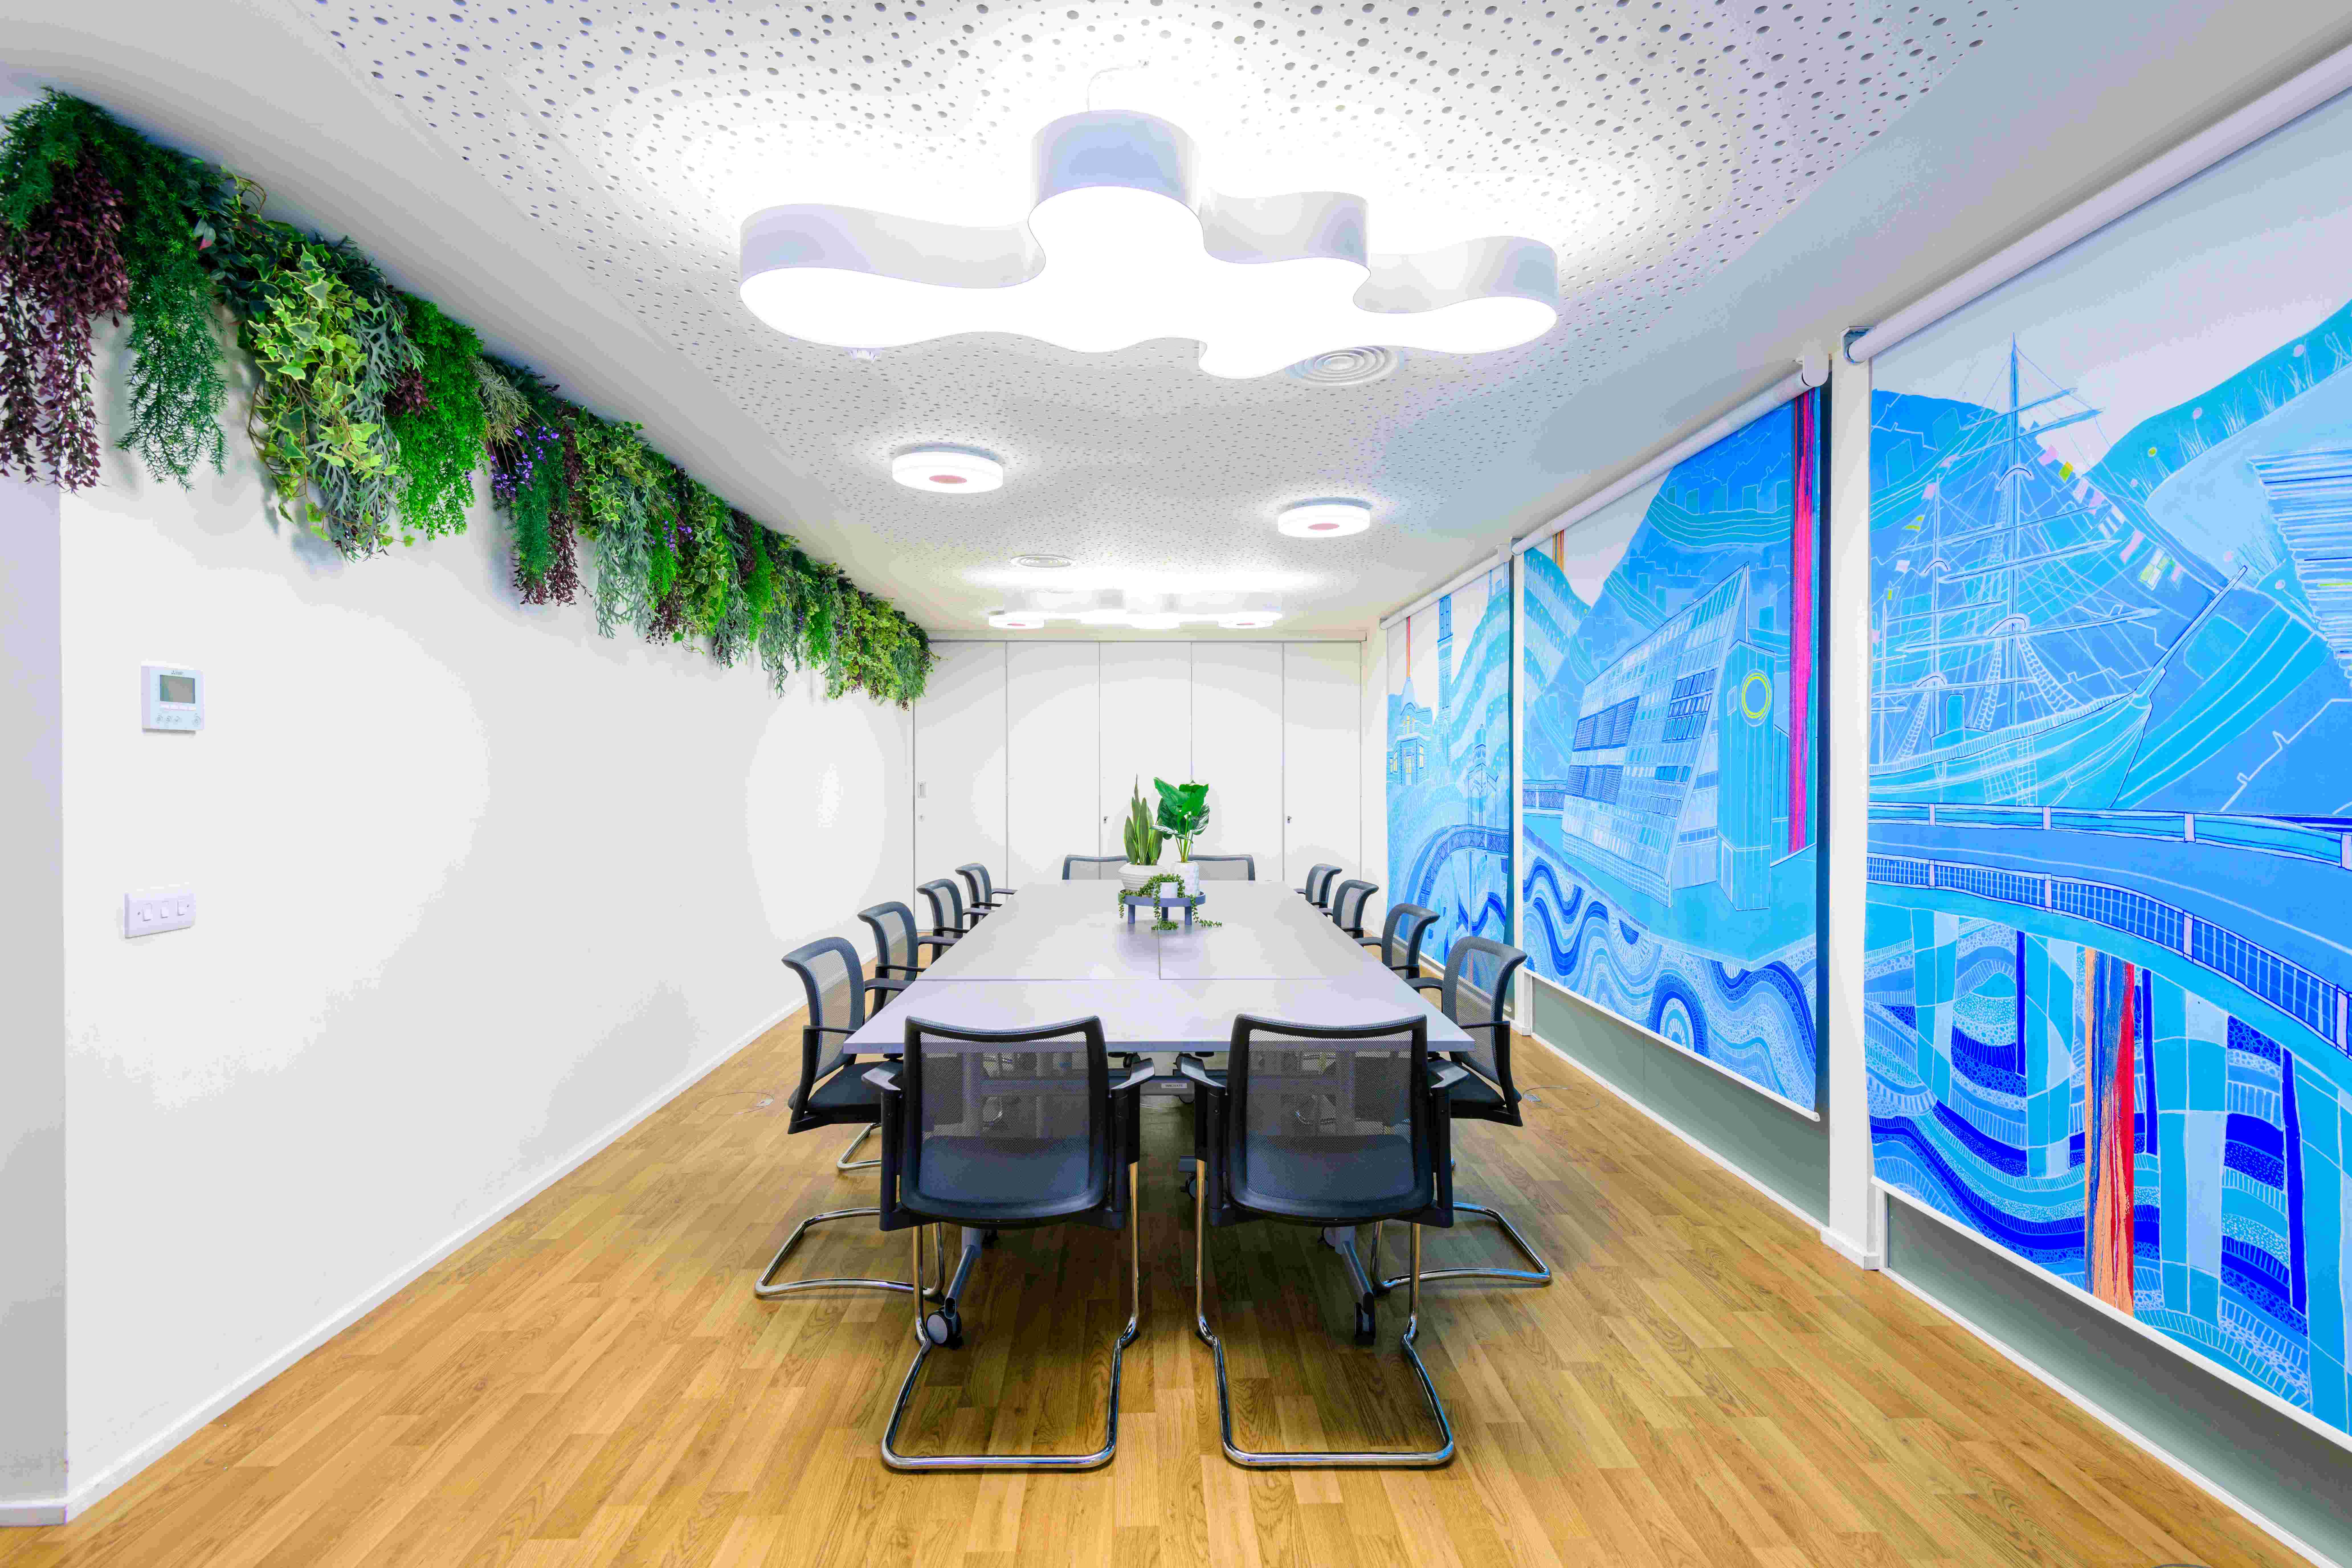 Reverse image of innovate meeting room